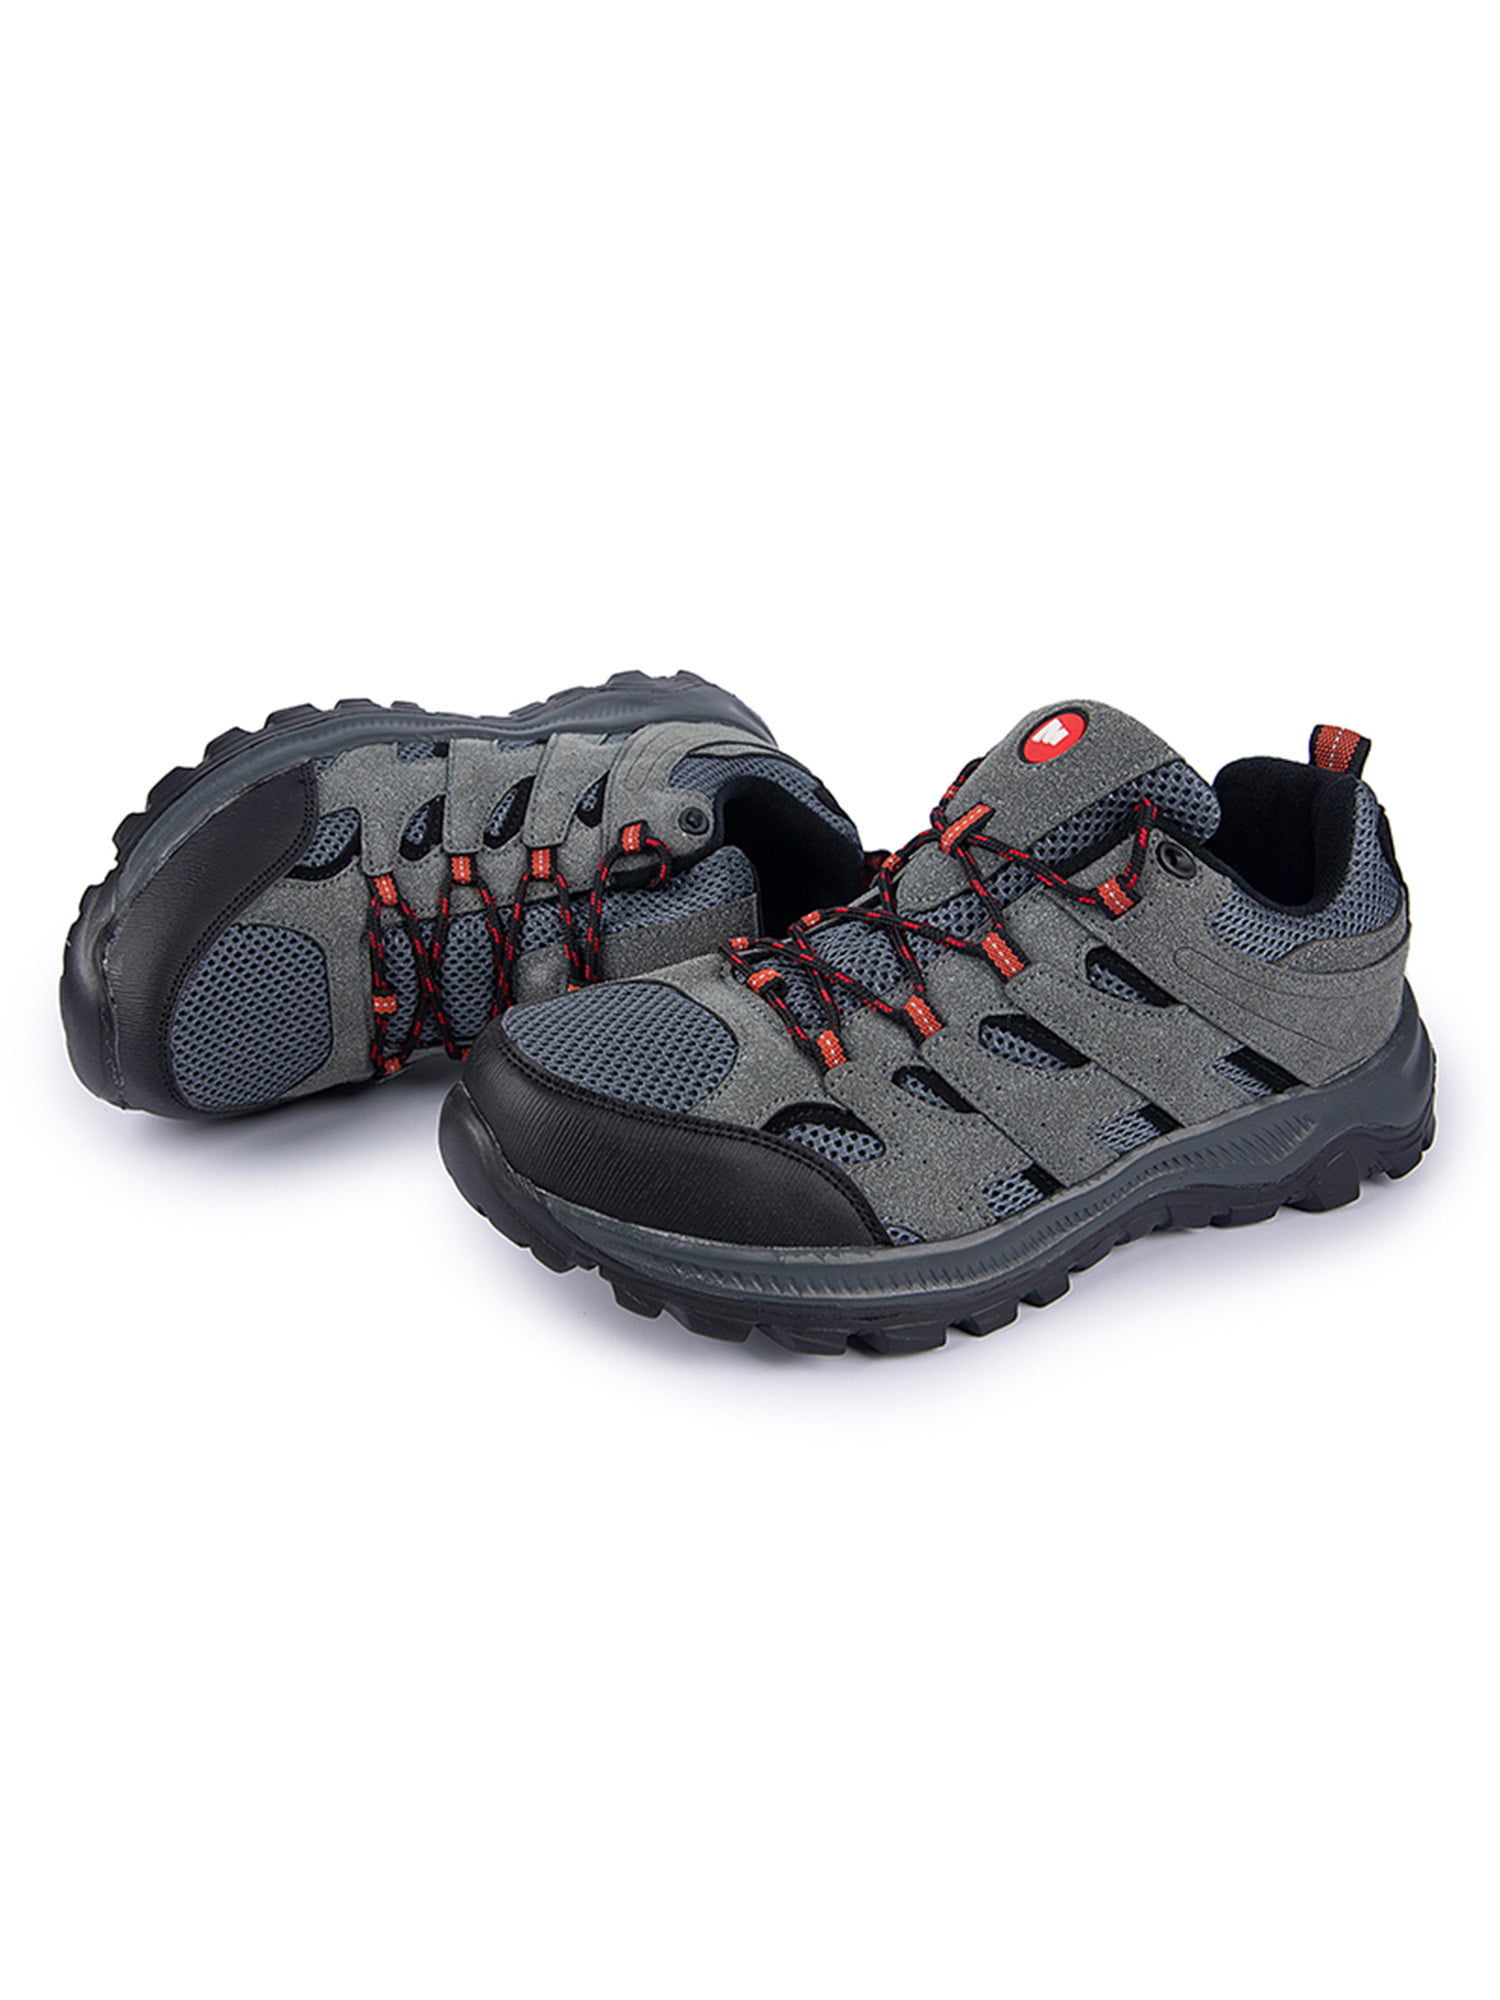 JTop Men's Waterproof Hiking Shoes Non-Slip Outdoor Hiking Sneakers Lightweight Walking Shoes